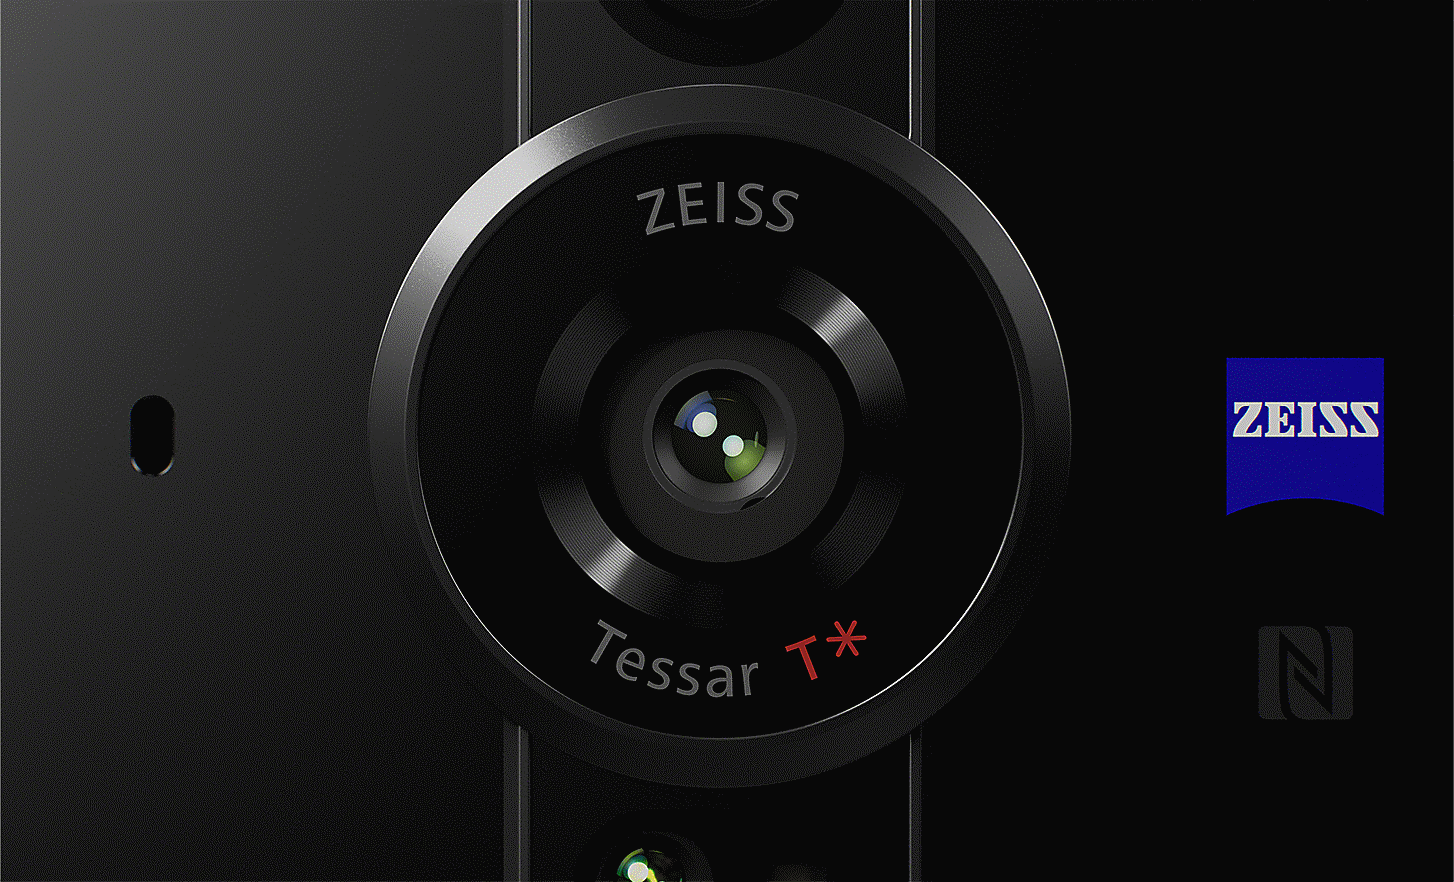 Detailní záběr na objektiv ZEISS Tessar T* s logem ZEISS